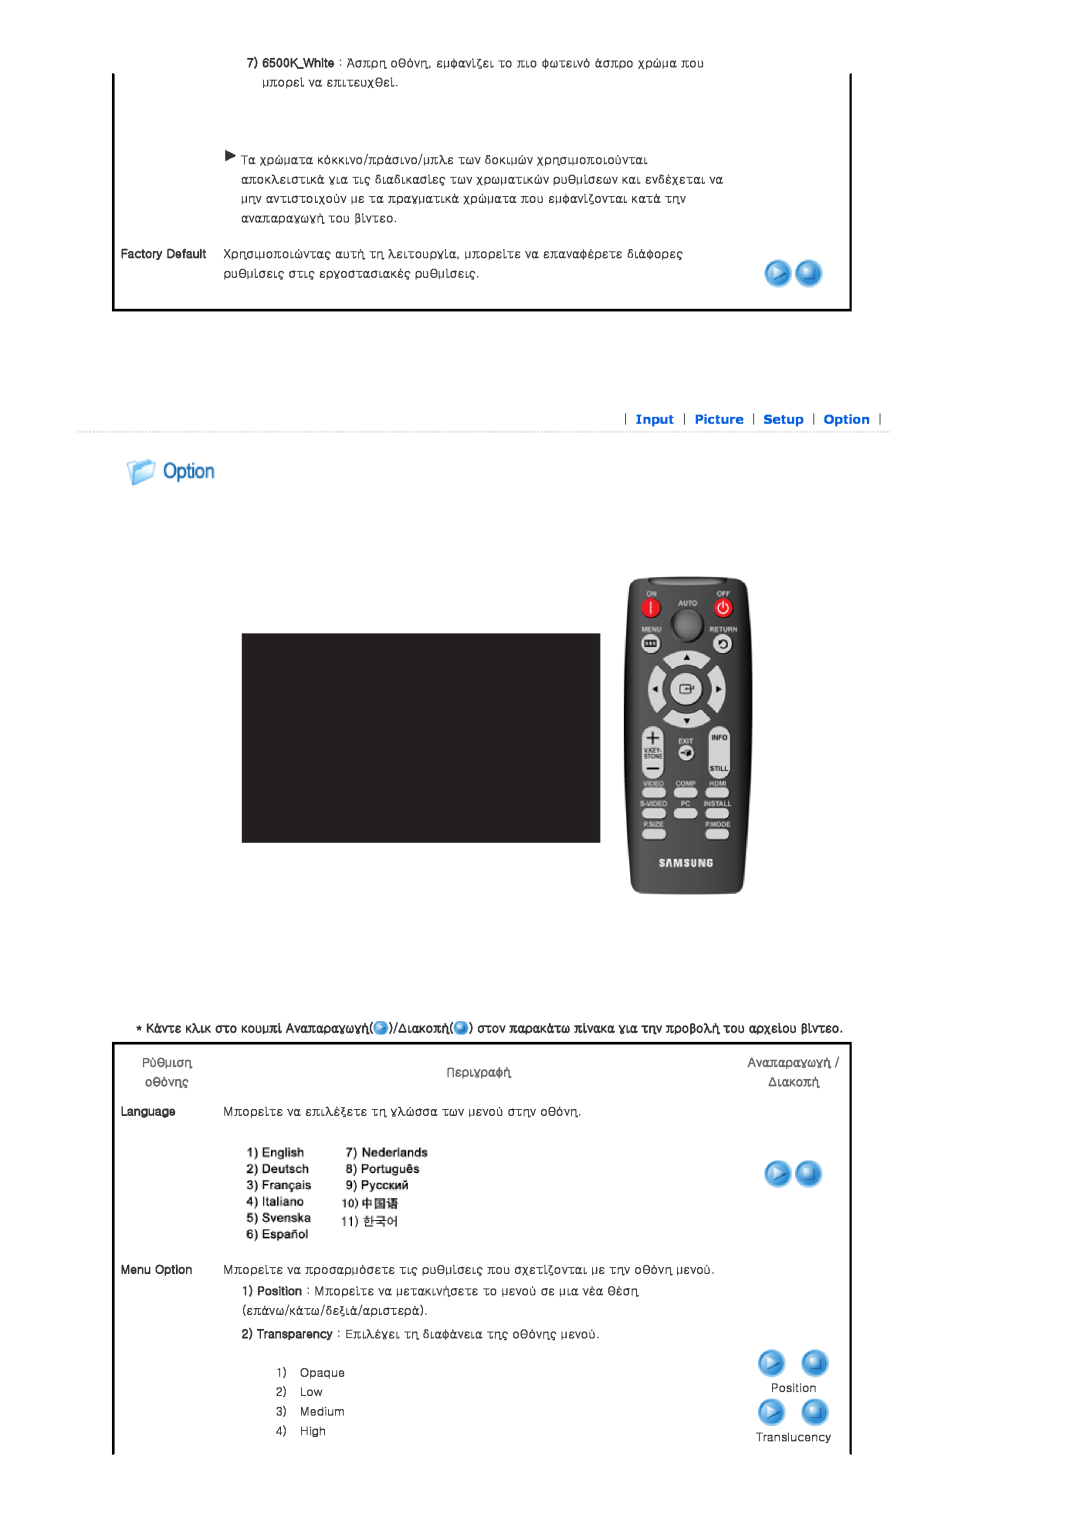 Samsung SPD400SFX/EN, SPD400SX/EN manual Input Picture Setup Option, Ρύθμιση, οθόνης, Περιγραφή 